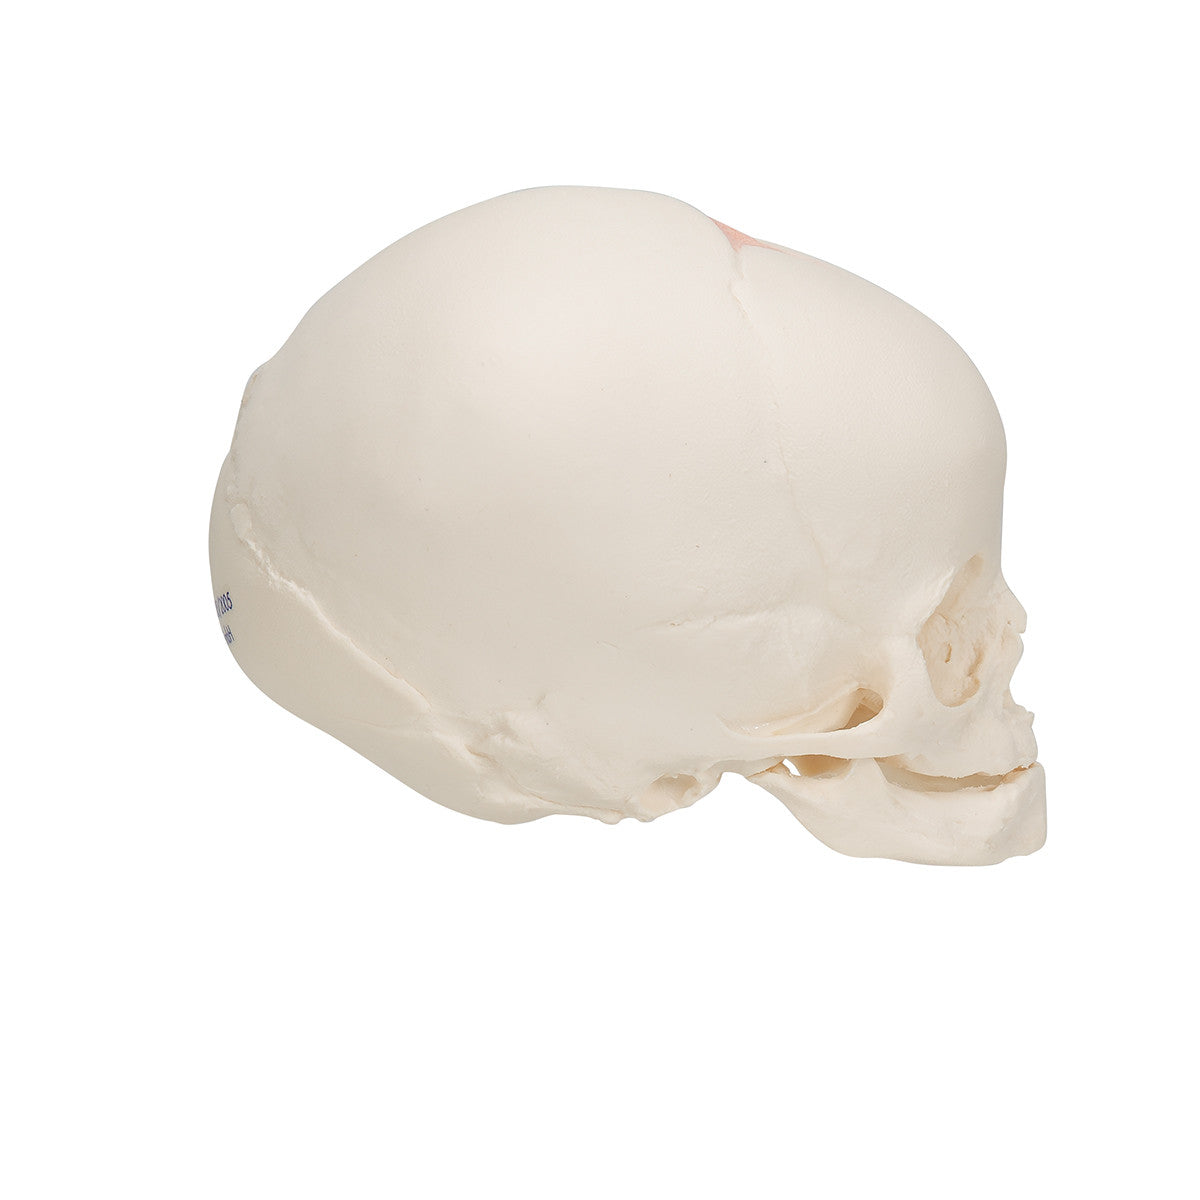 Fetal Skull | 3B Scientific A25